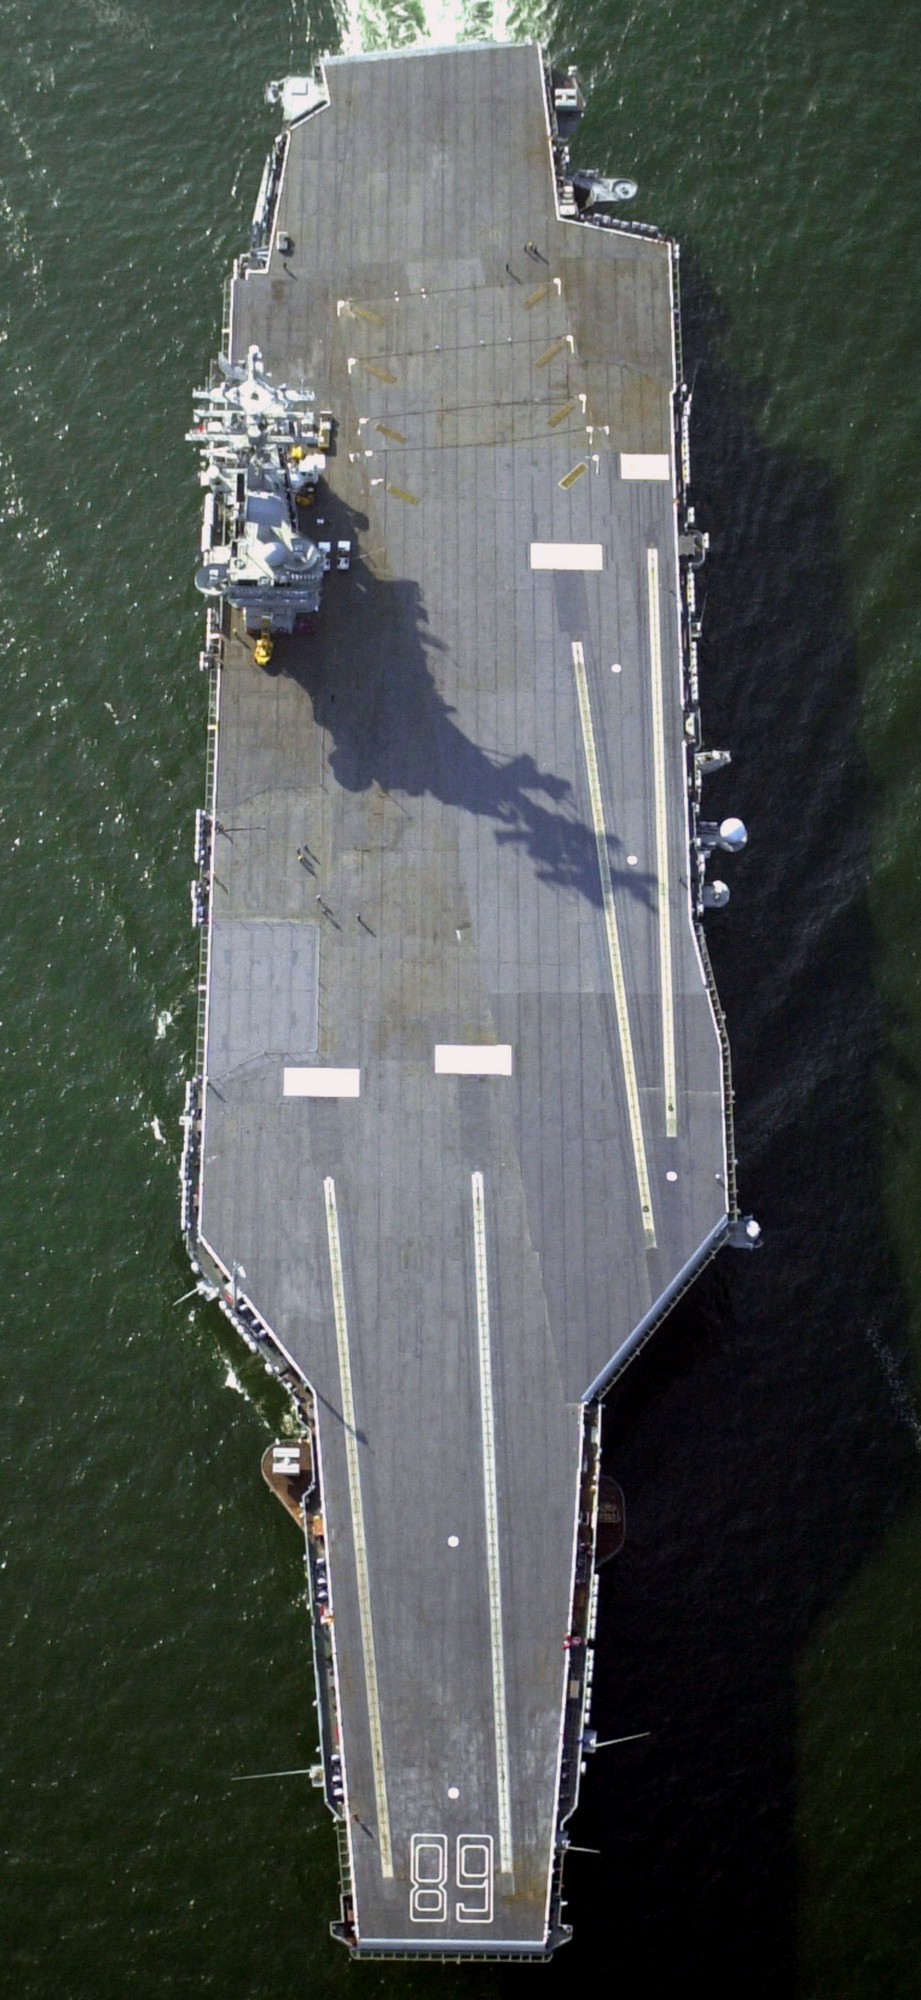 cvn-68 uss nimitz aircraft carrier us navy trials rcoh 126